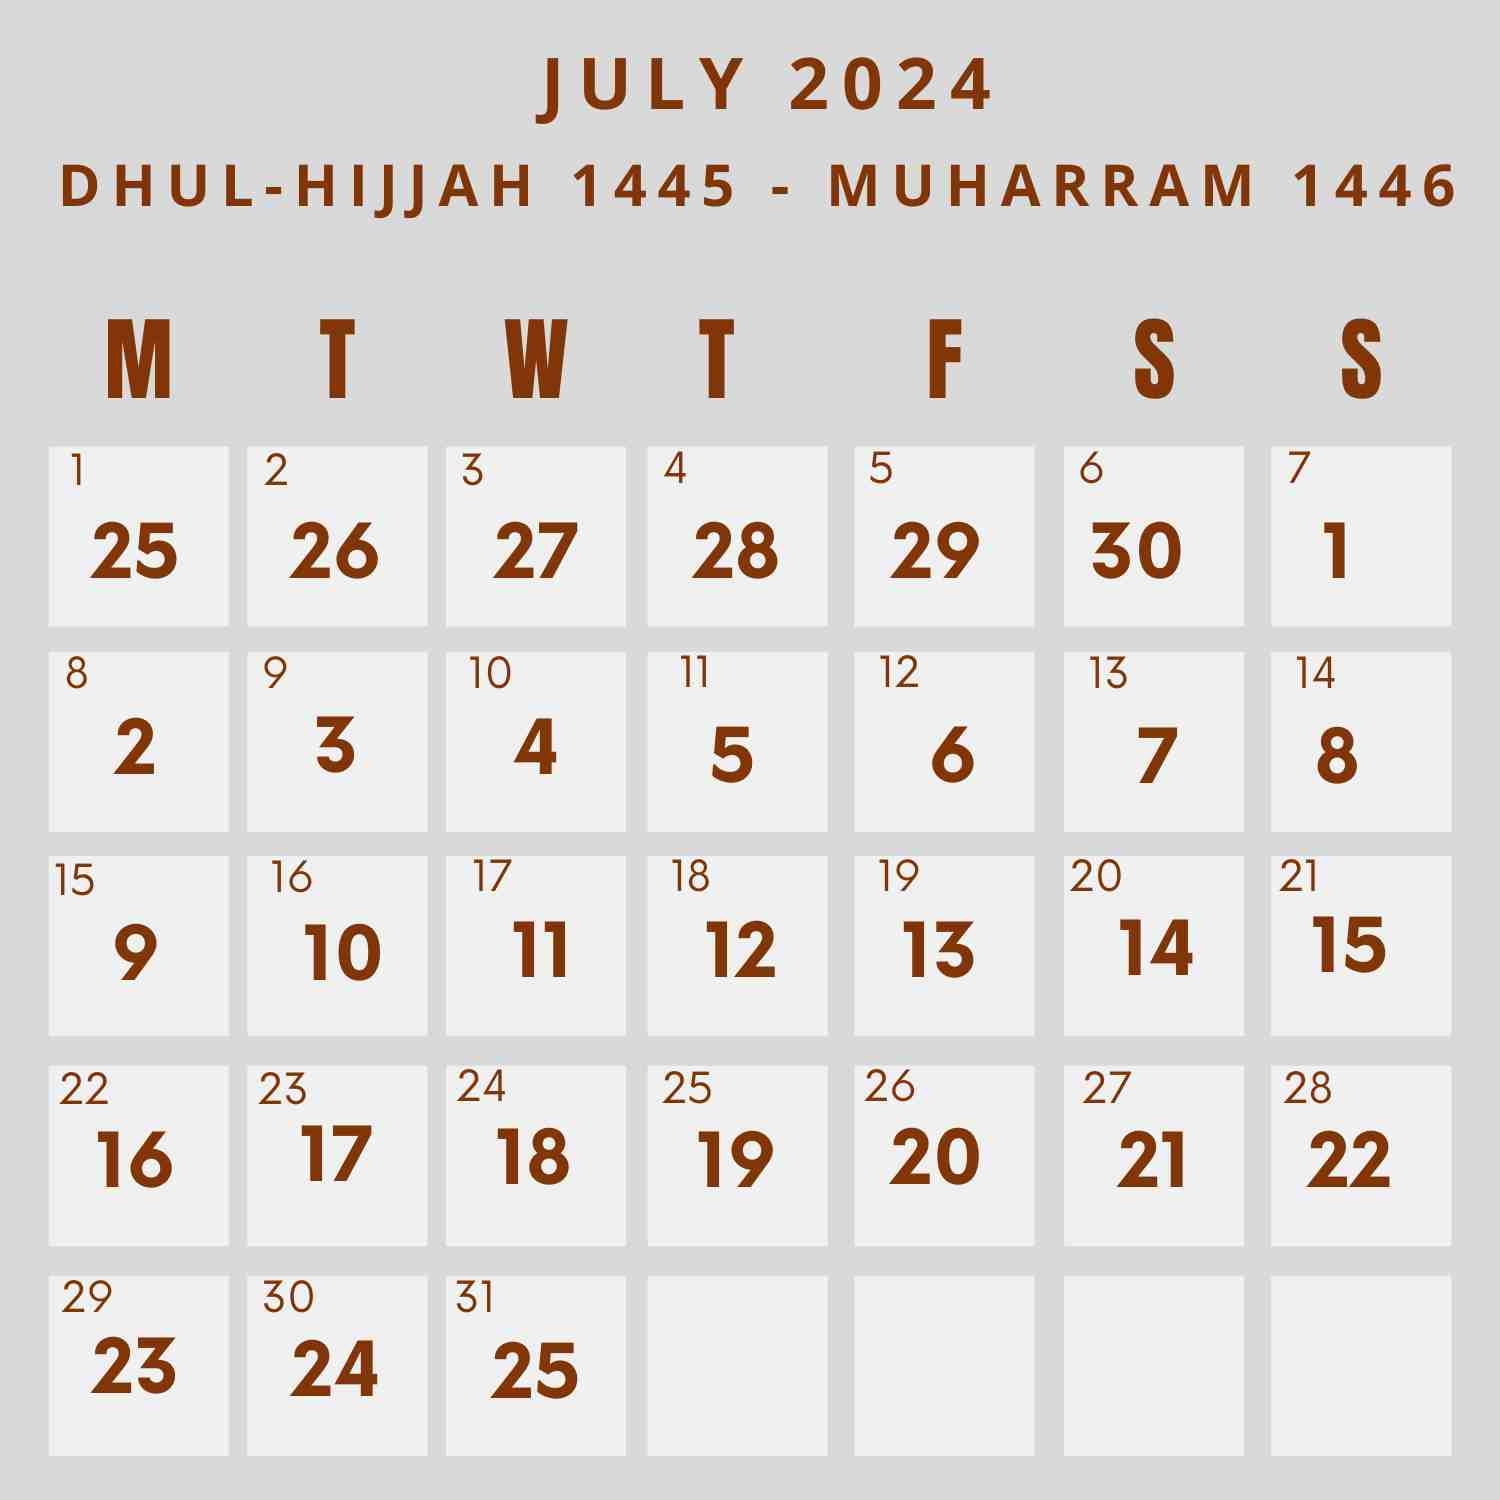 Islamic Calendar 2024 - Khwajadarbar regarding 8 July 2024 In Islamic Calendar